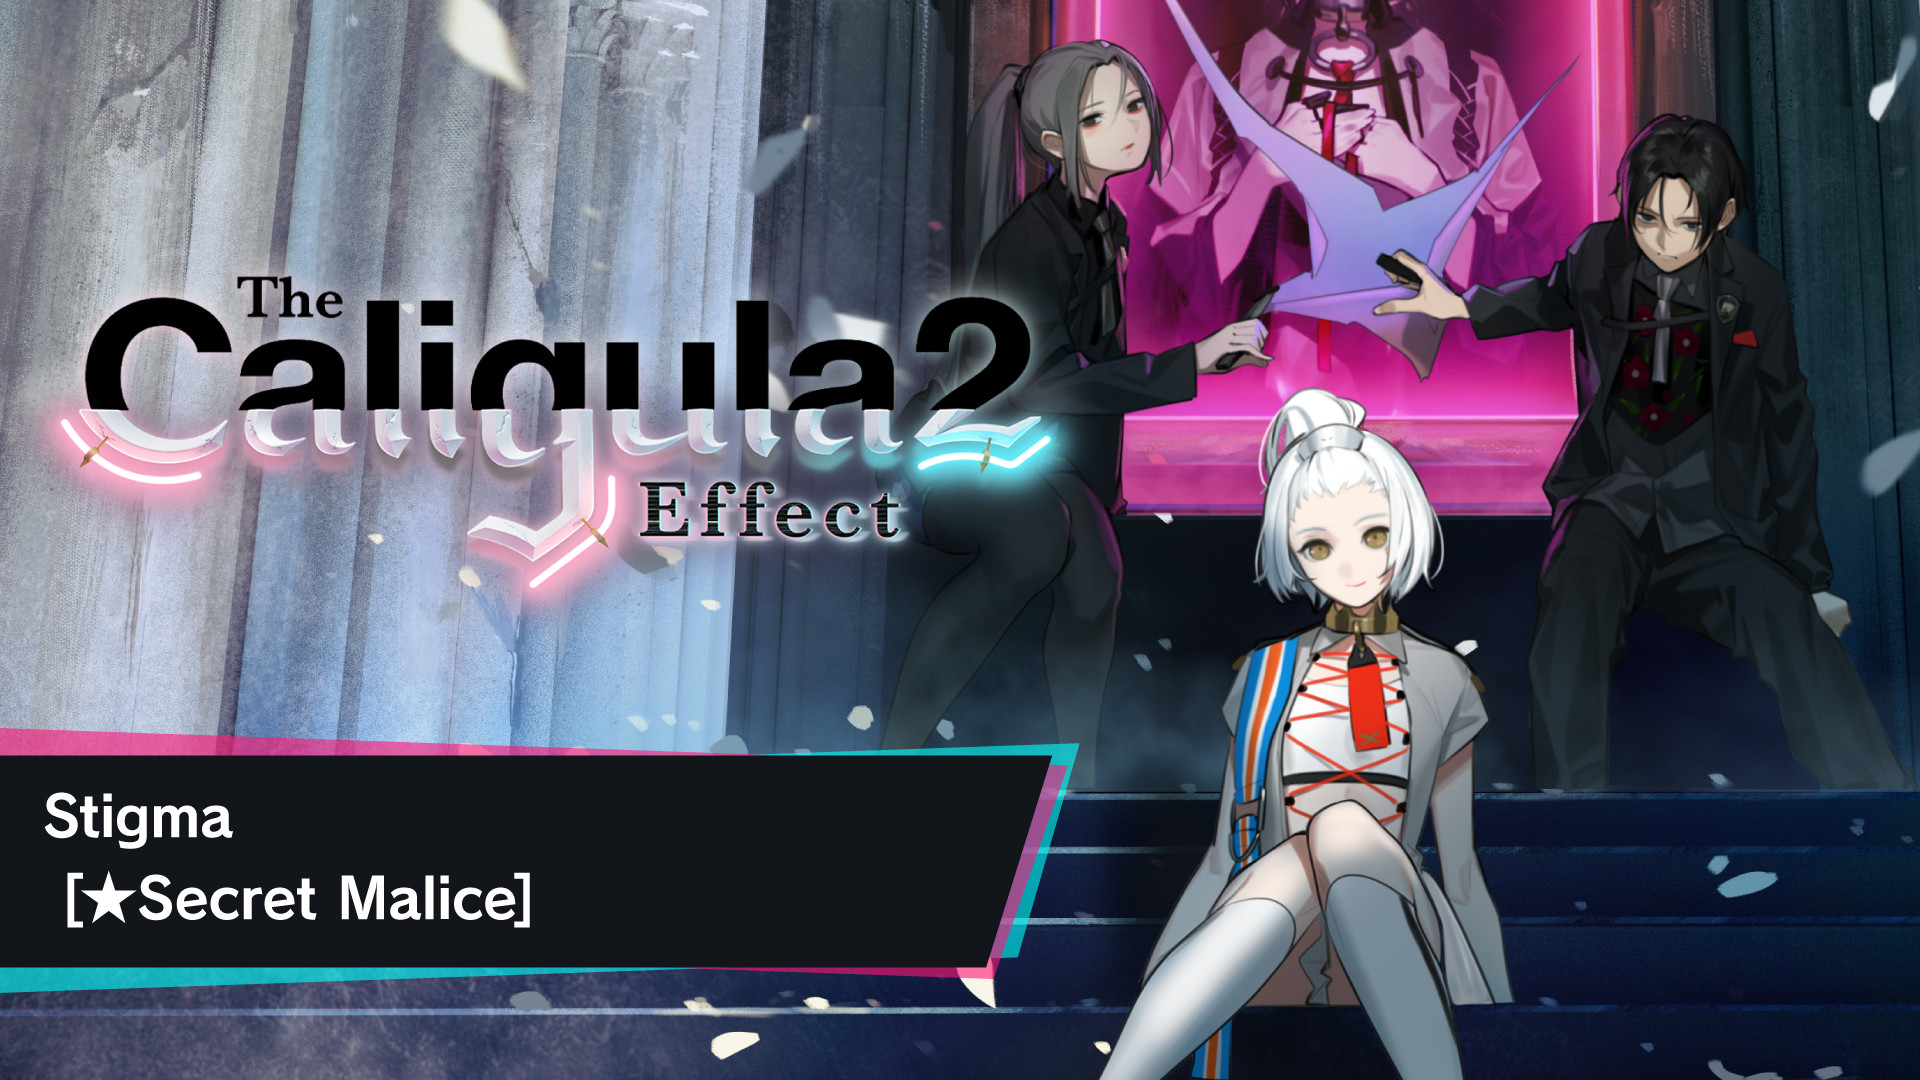 The Caligula Effect 2 - Stigma [★Secret Malice] Featured Screenshot #1